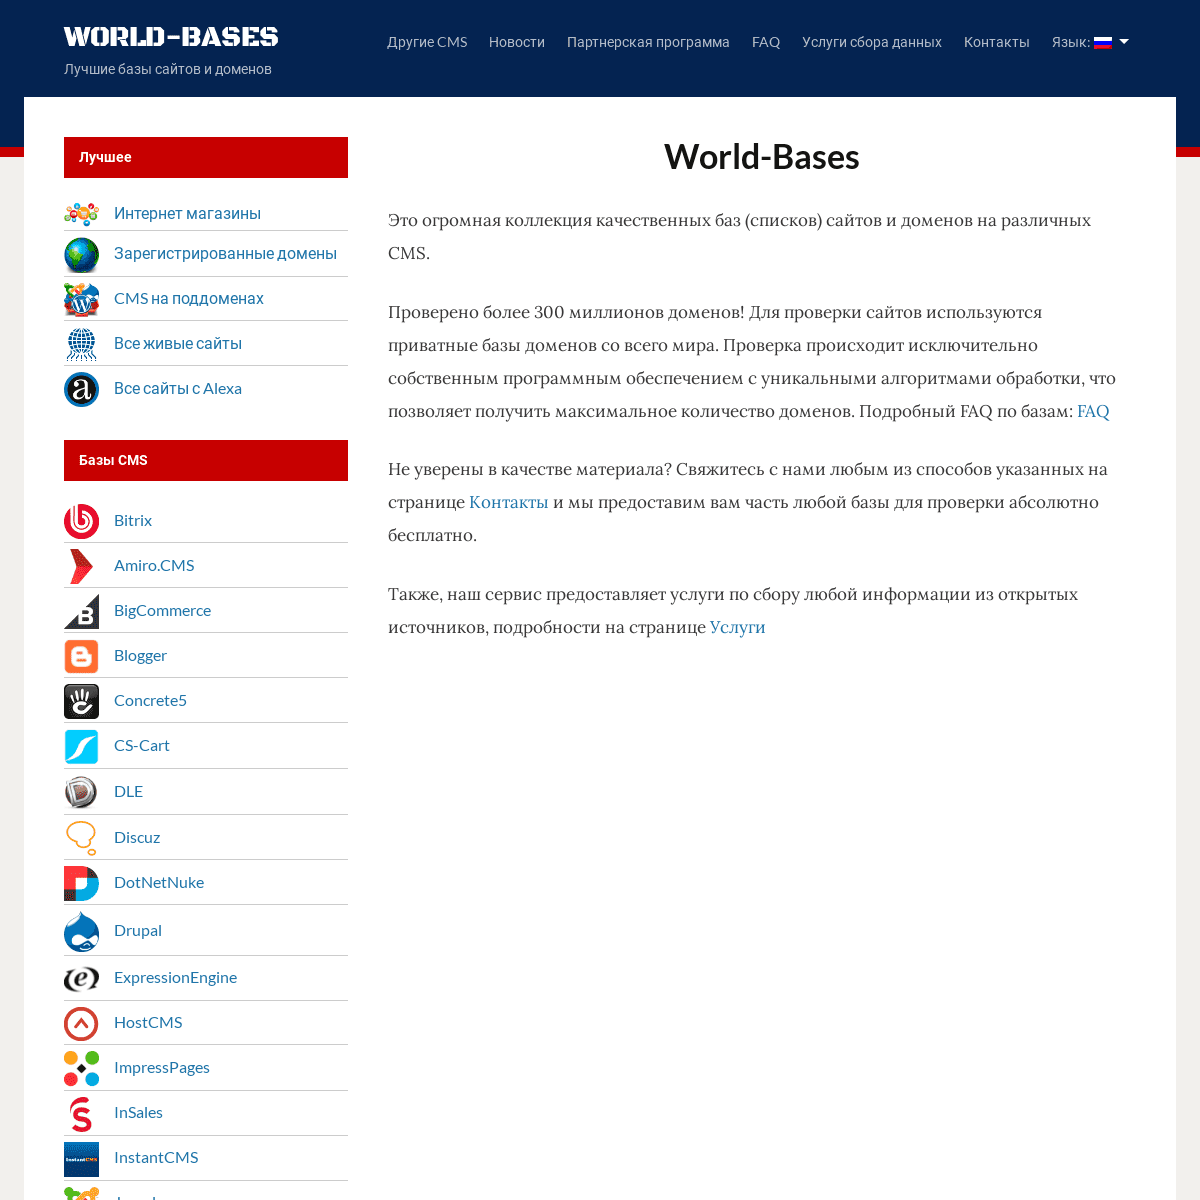 A complete backup of https://world-bases.com